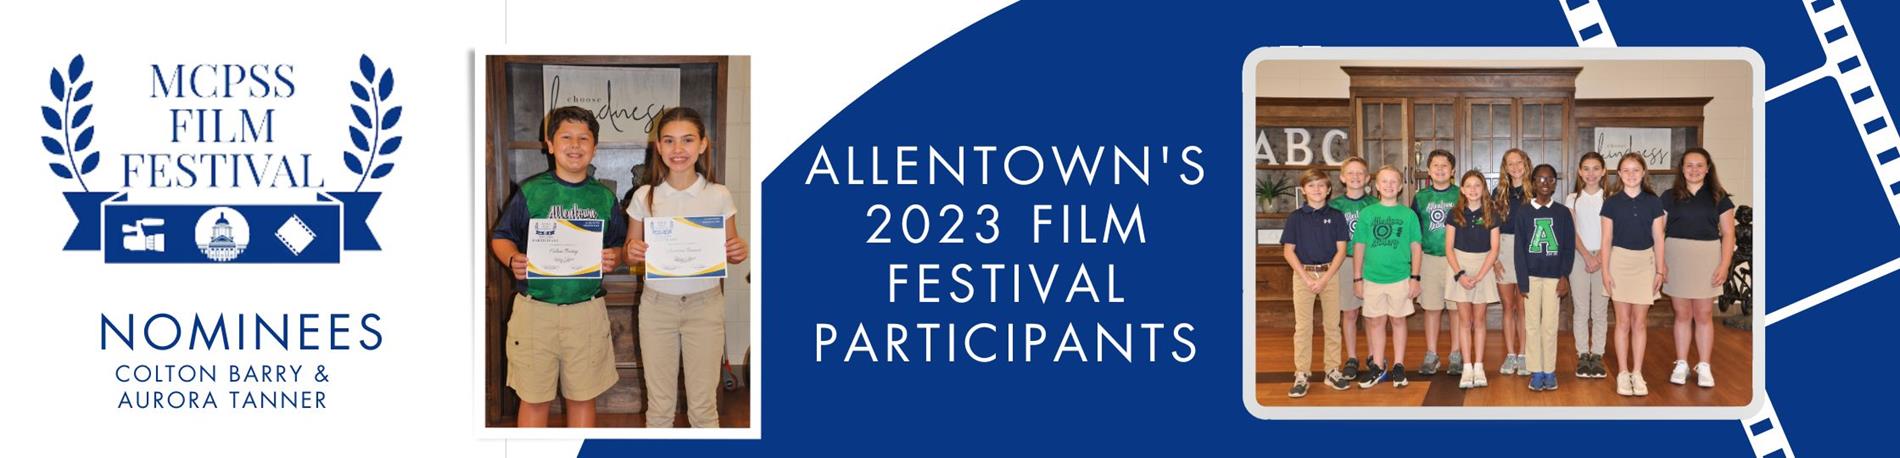 2023 Film Participants & Nominees